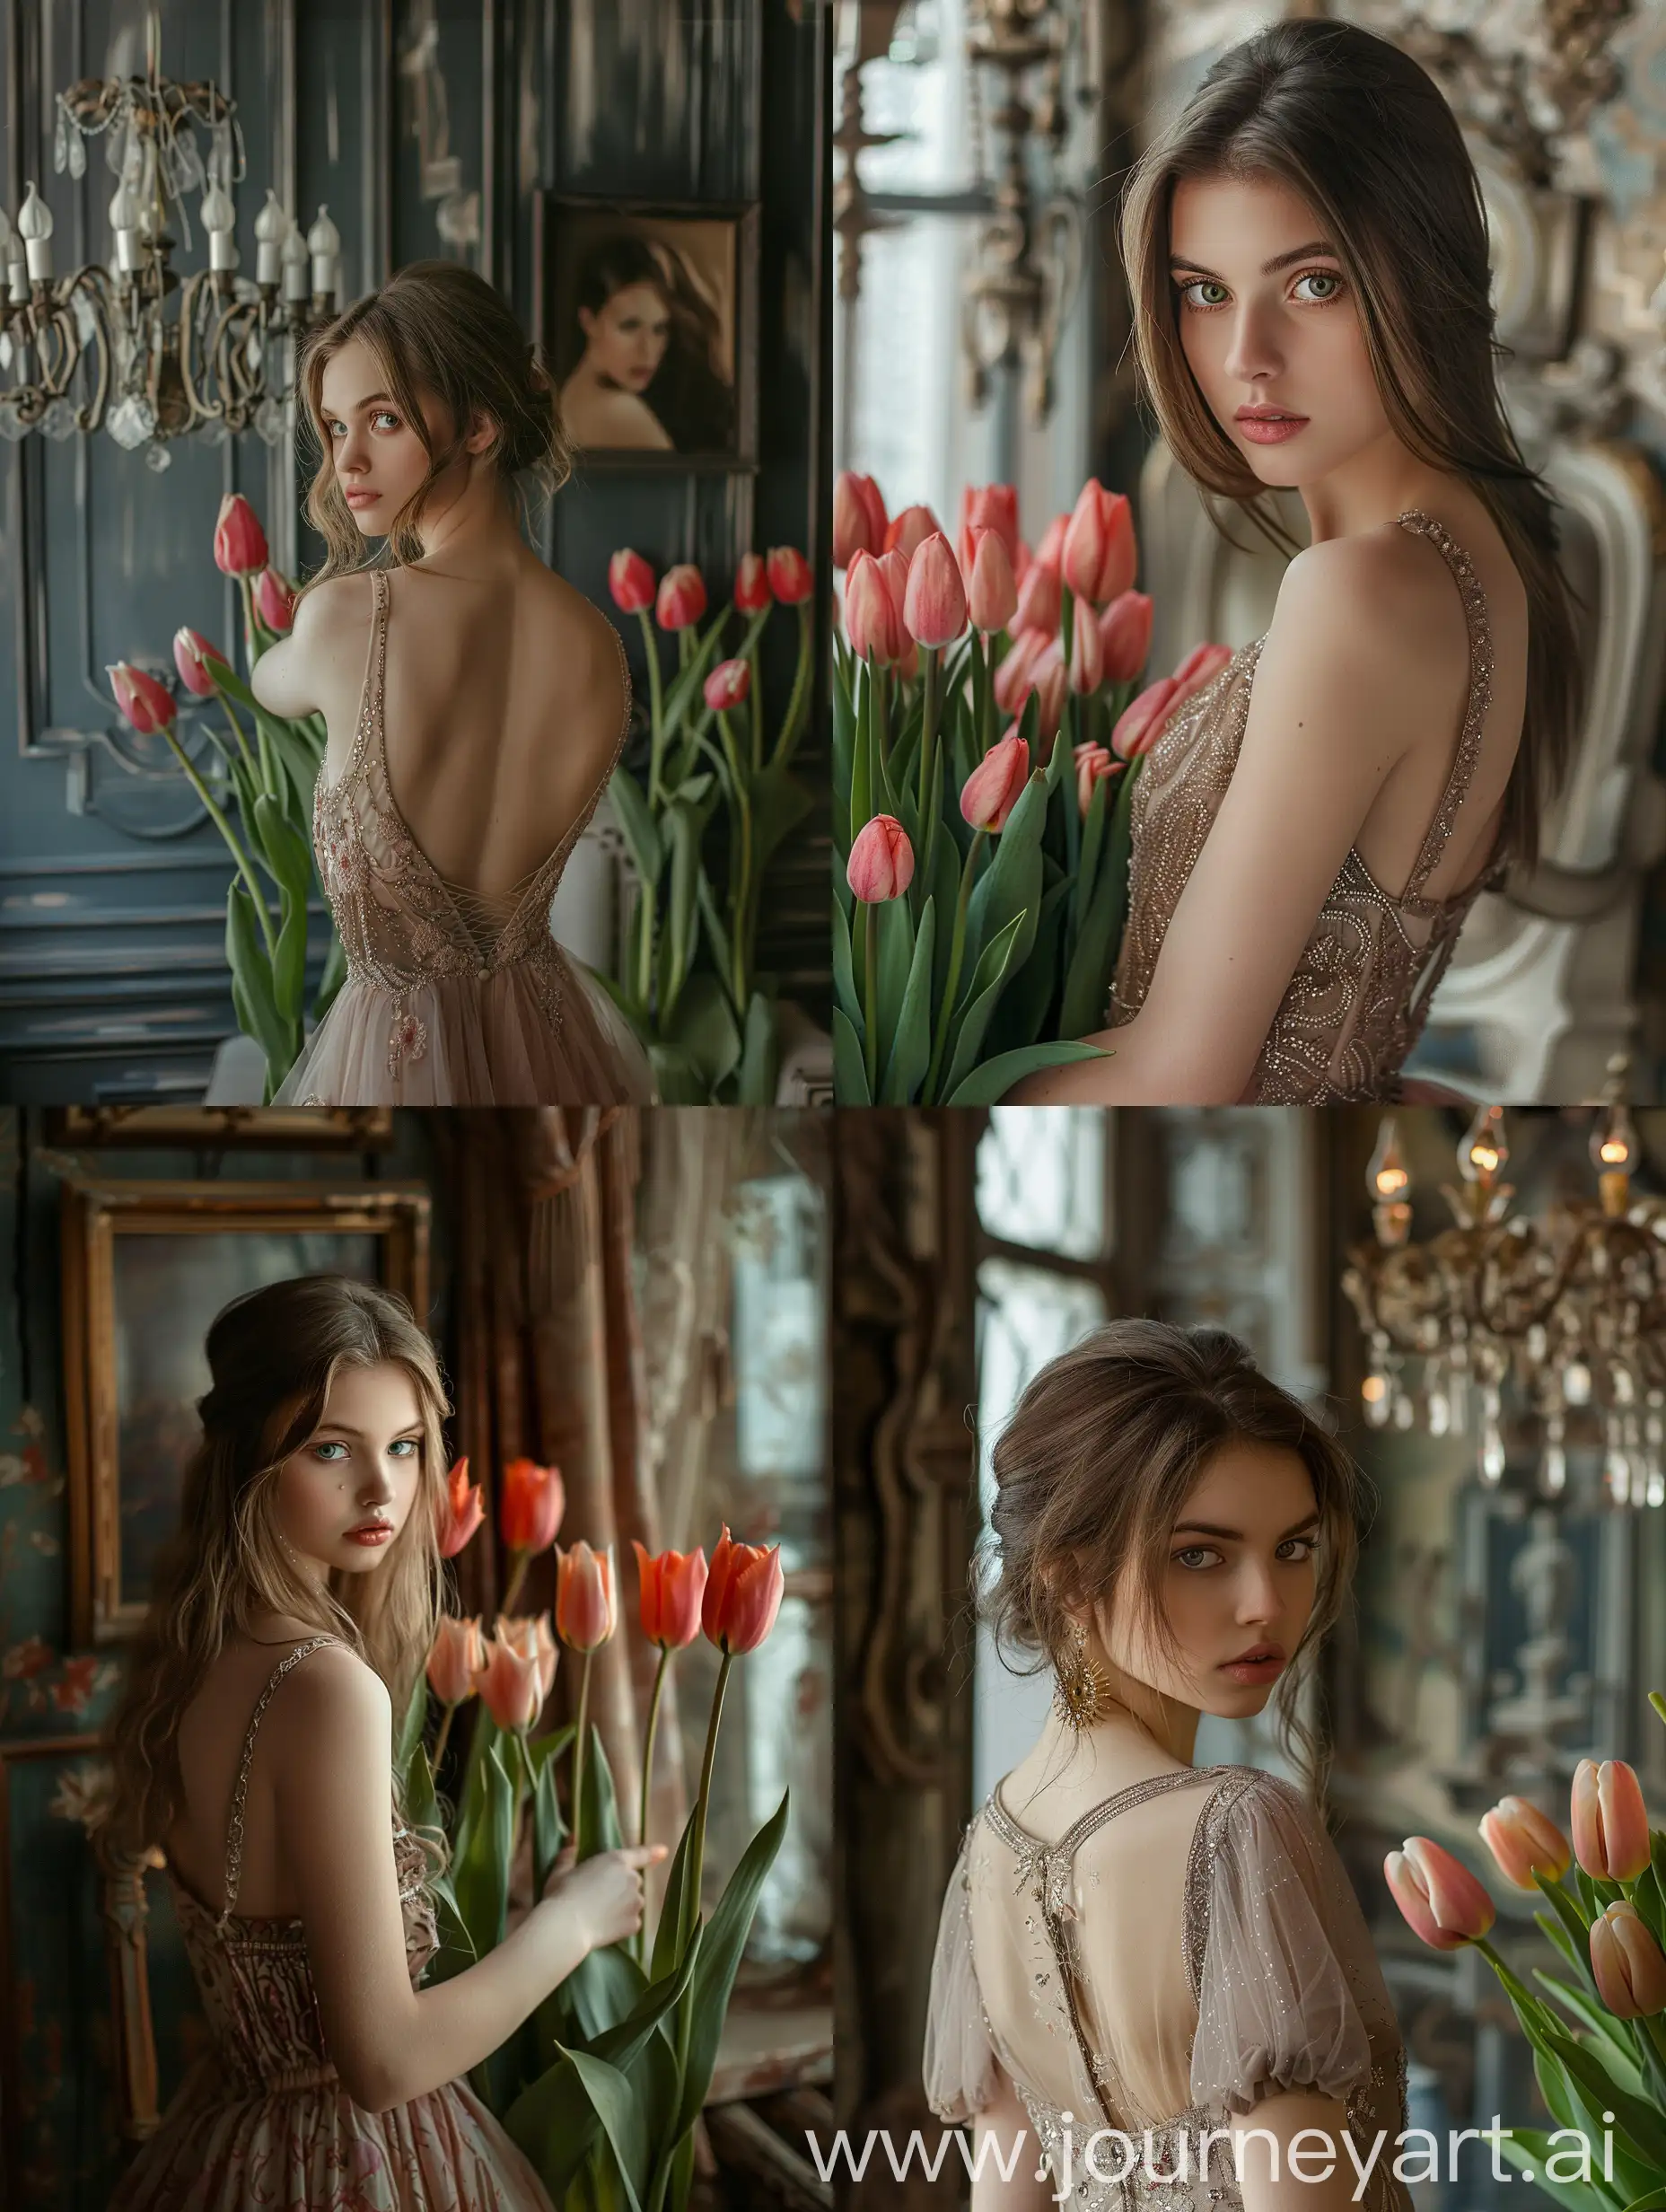 Girl-Admiring-Tulips-in-Elegant-Interior-Setting